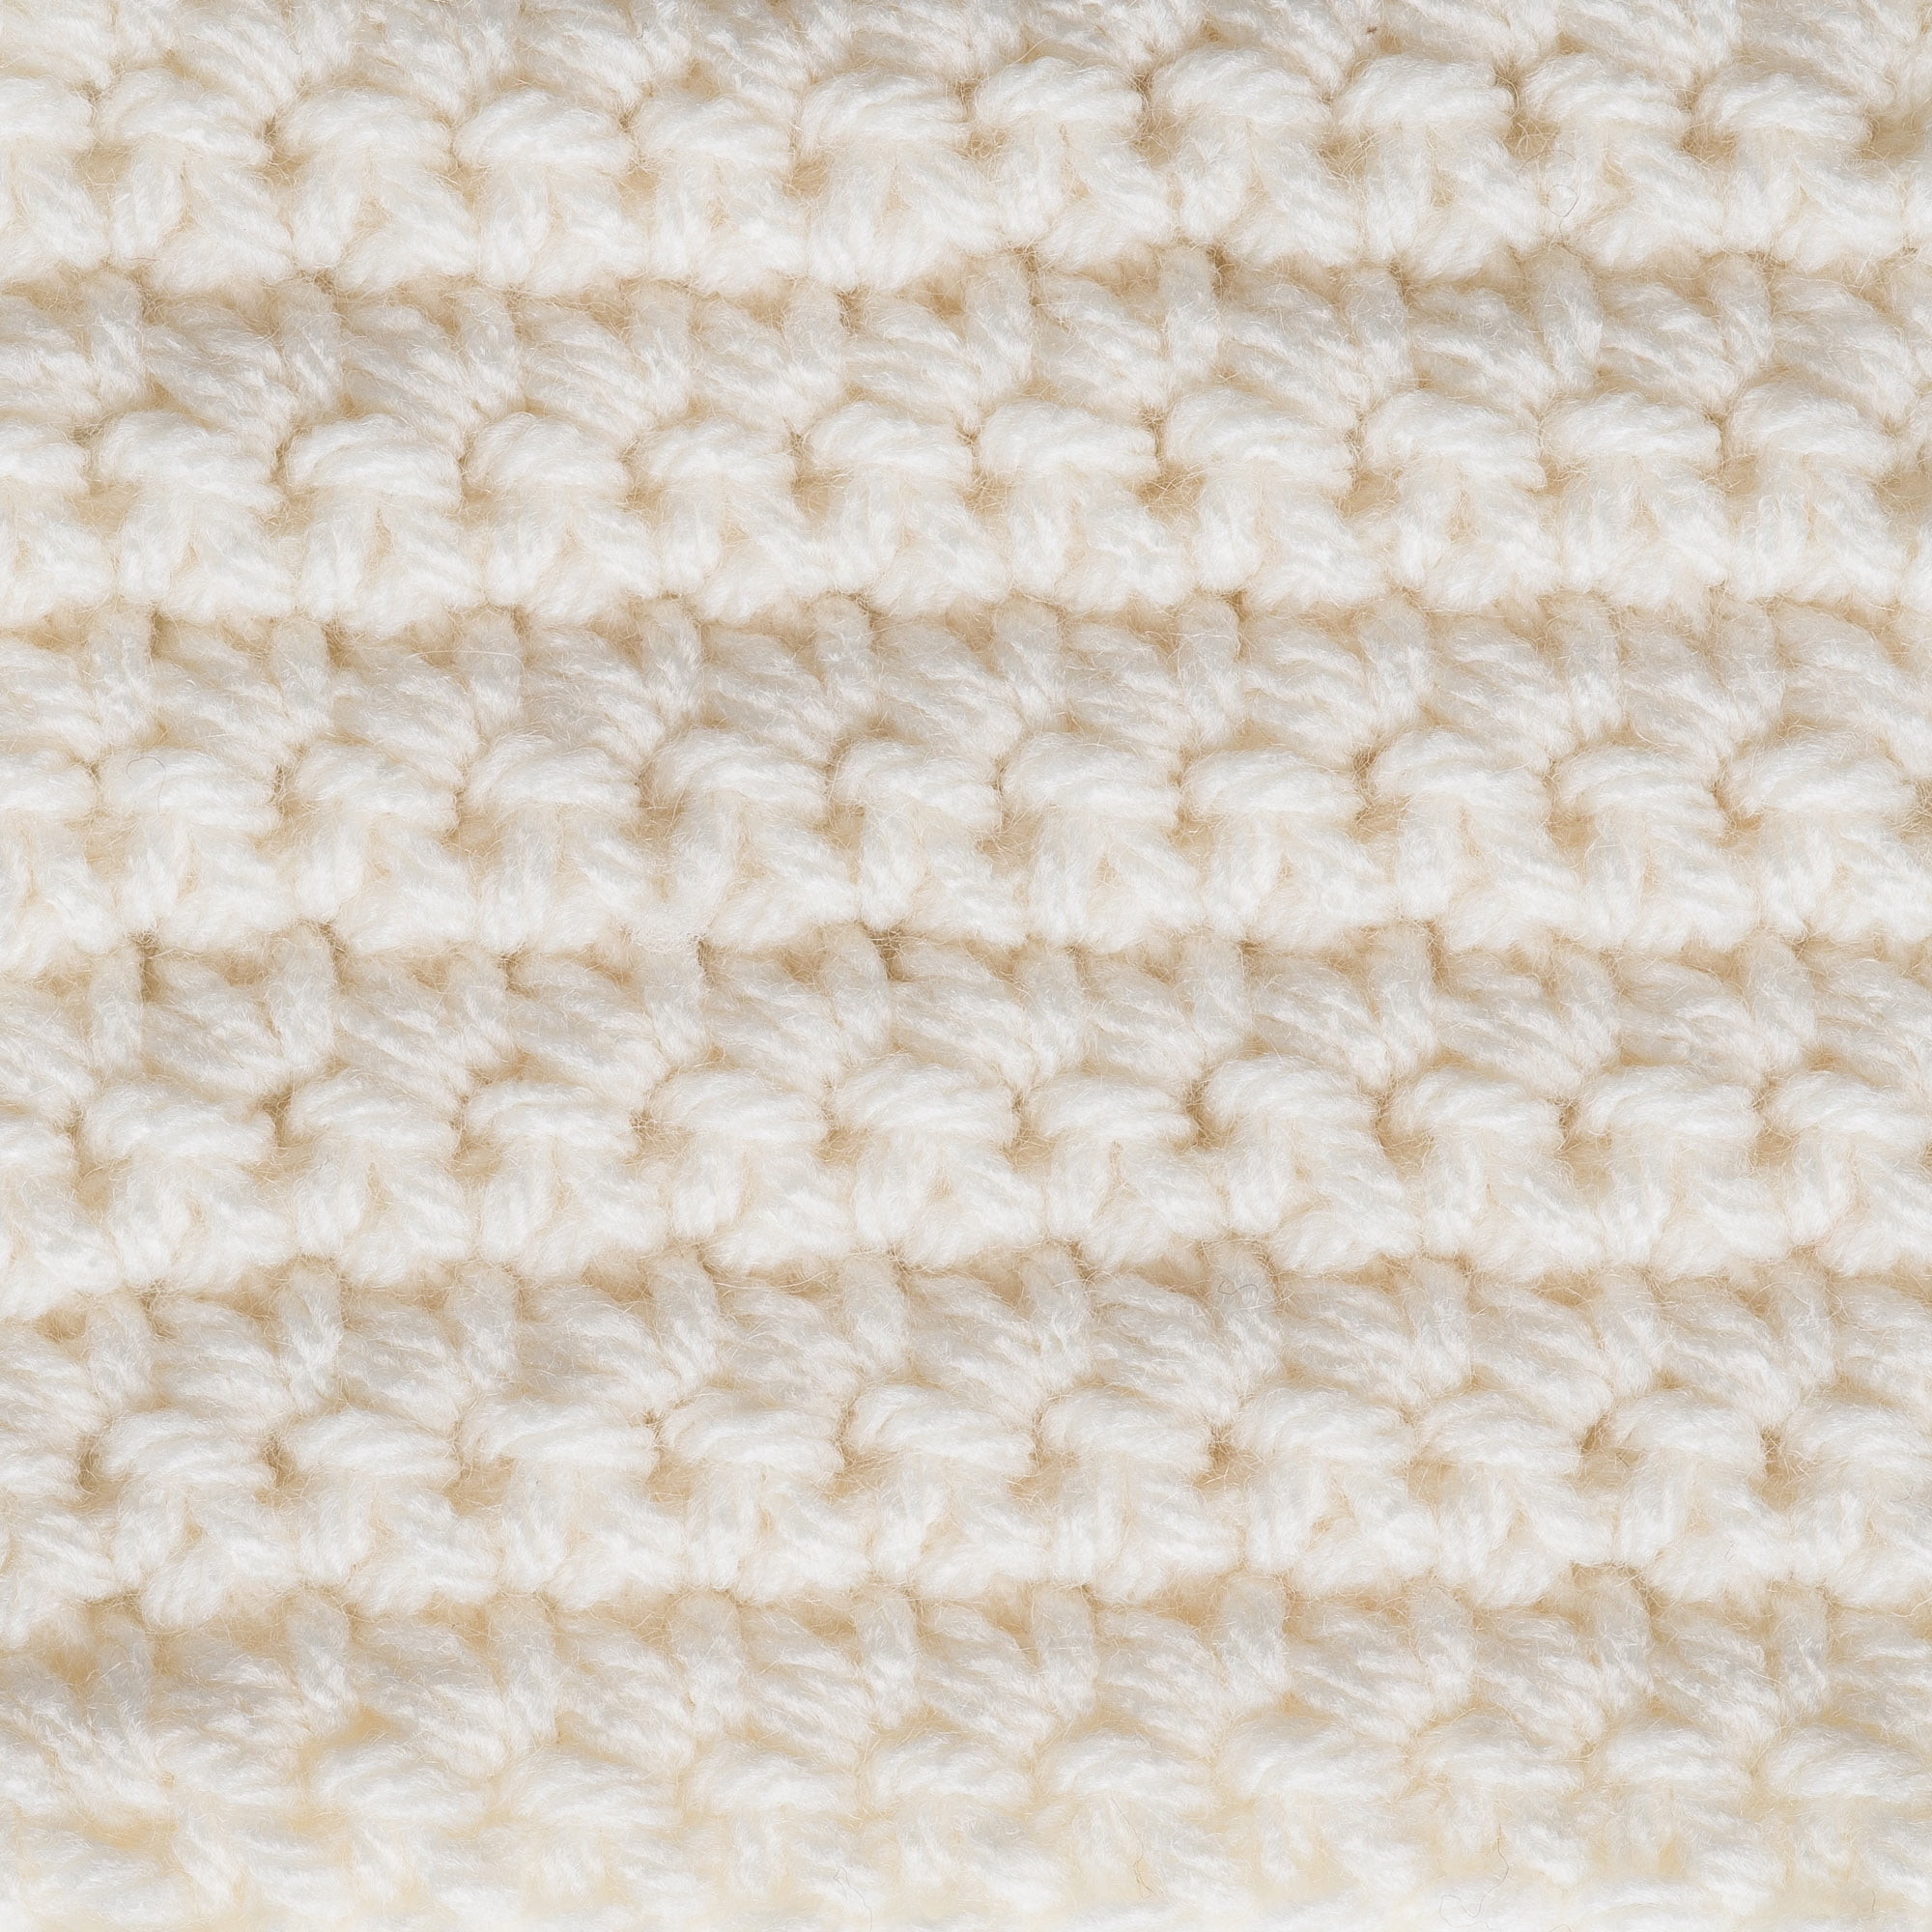 Bernat Super Value Carrot Yarn - 3 Pack of 198g/7oz - Acrylic - 4 Medium  (Worsted) - 426 Yards - Knitting/Crochet